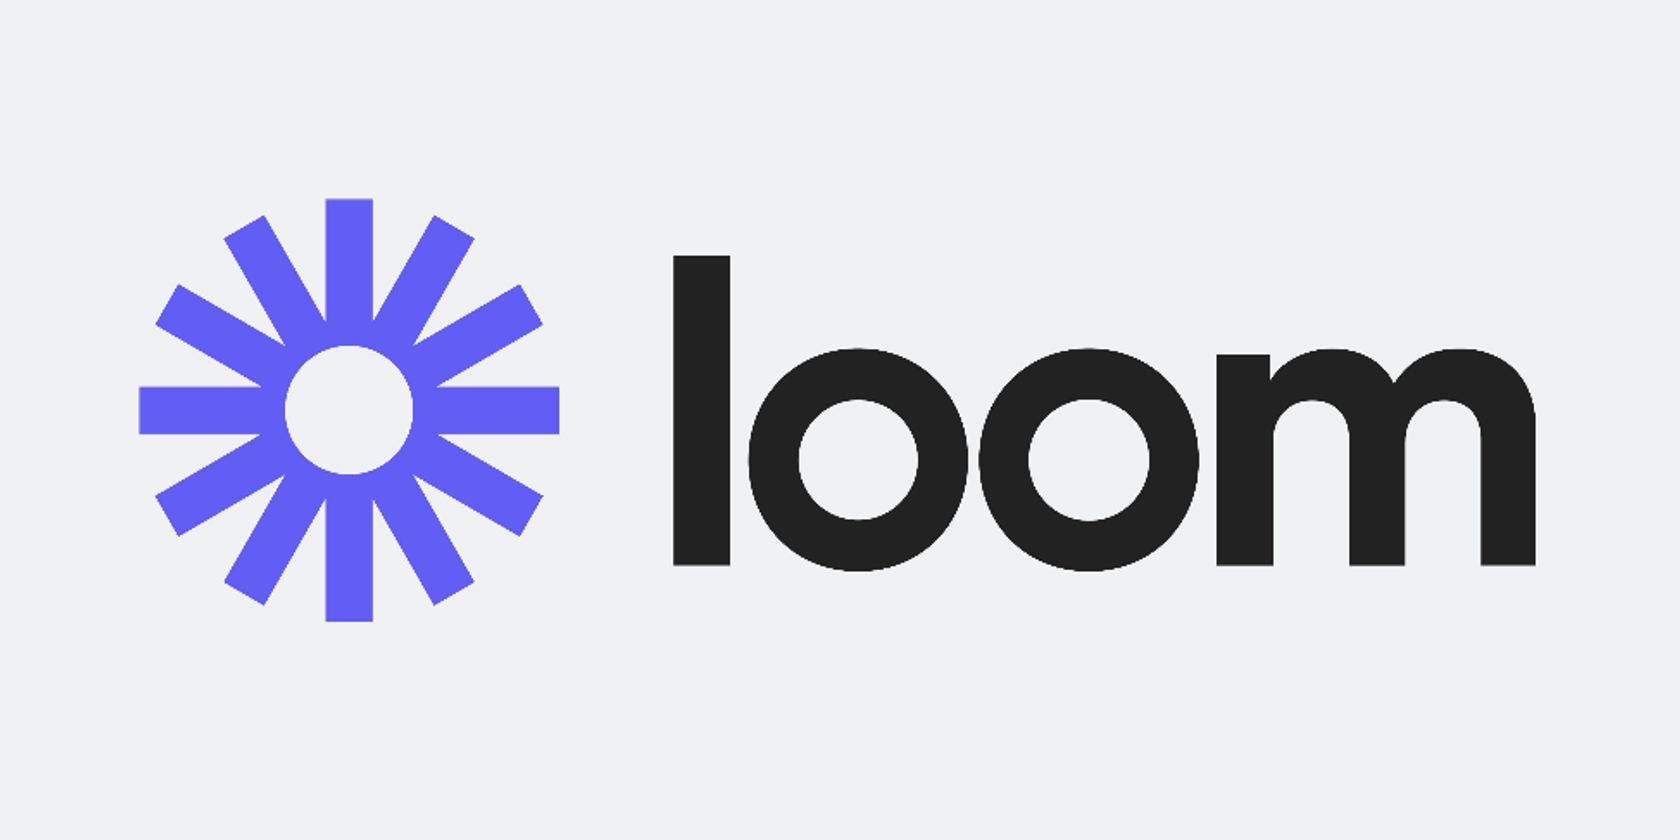 Loom app logo on a white background